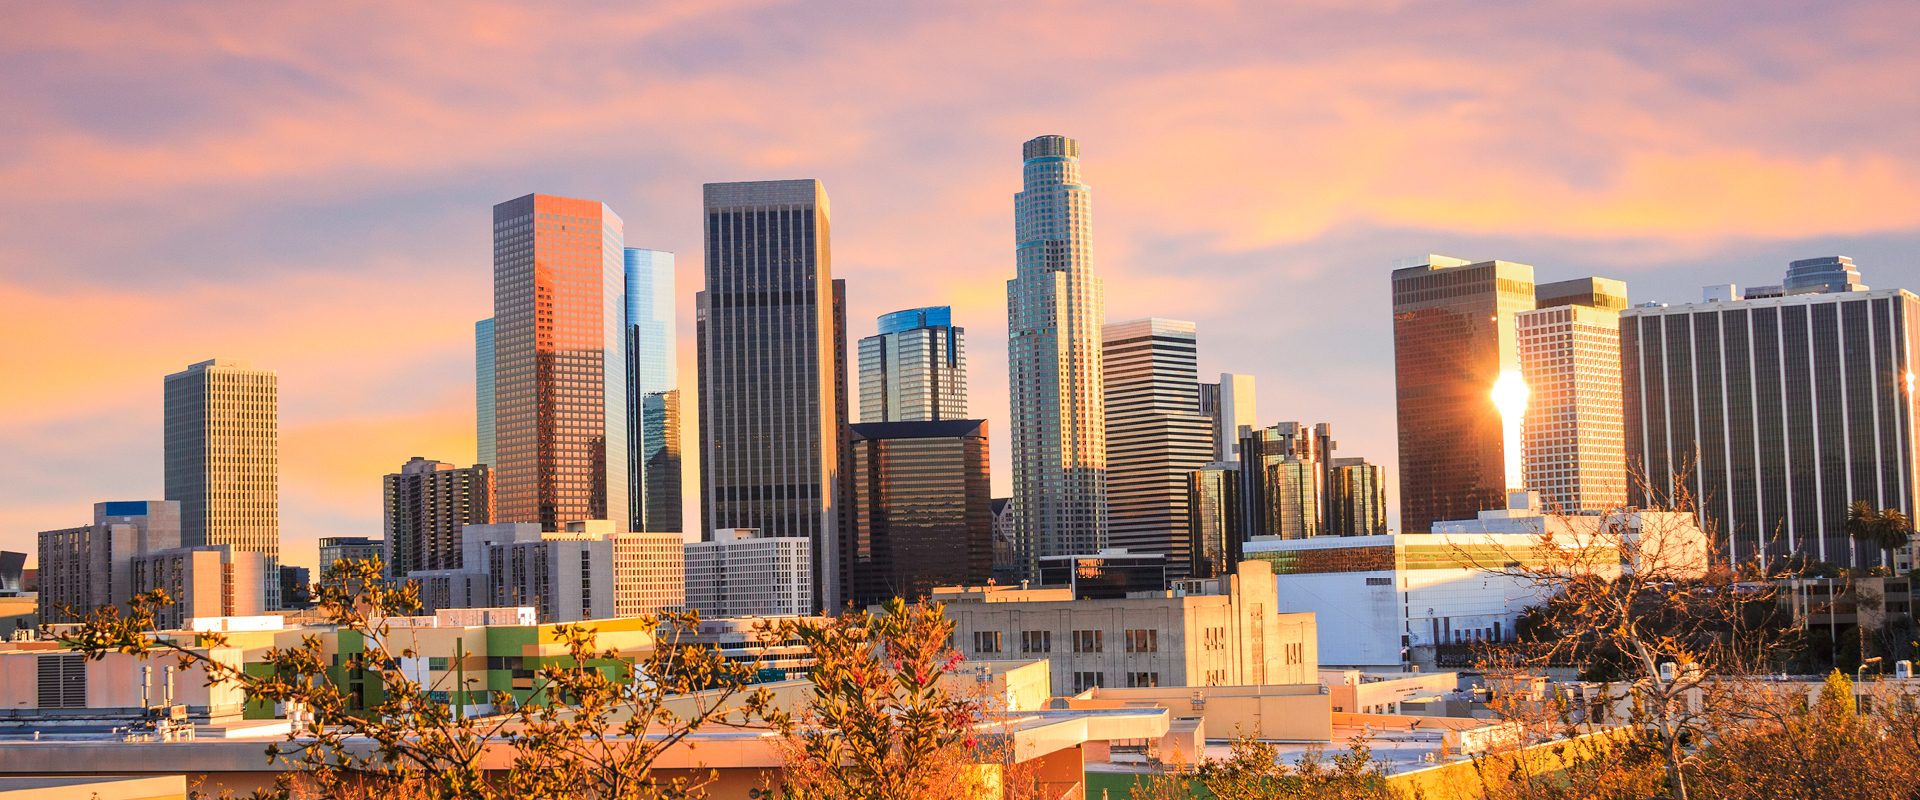 sun setting on Los Angeles CA city skyline